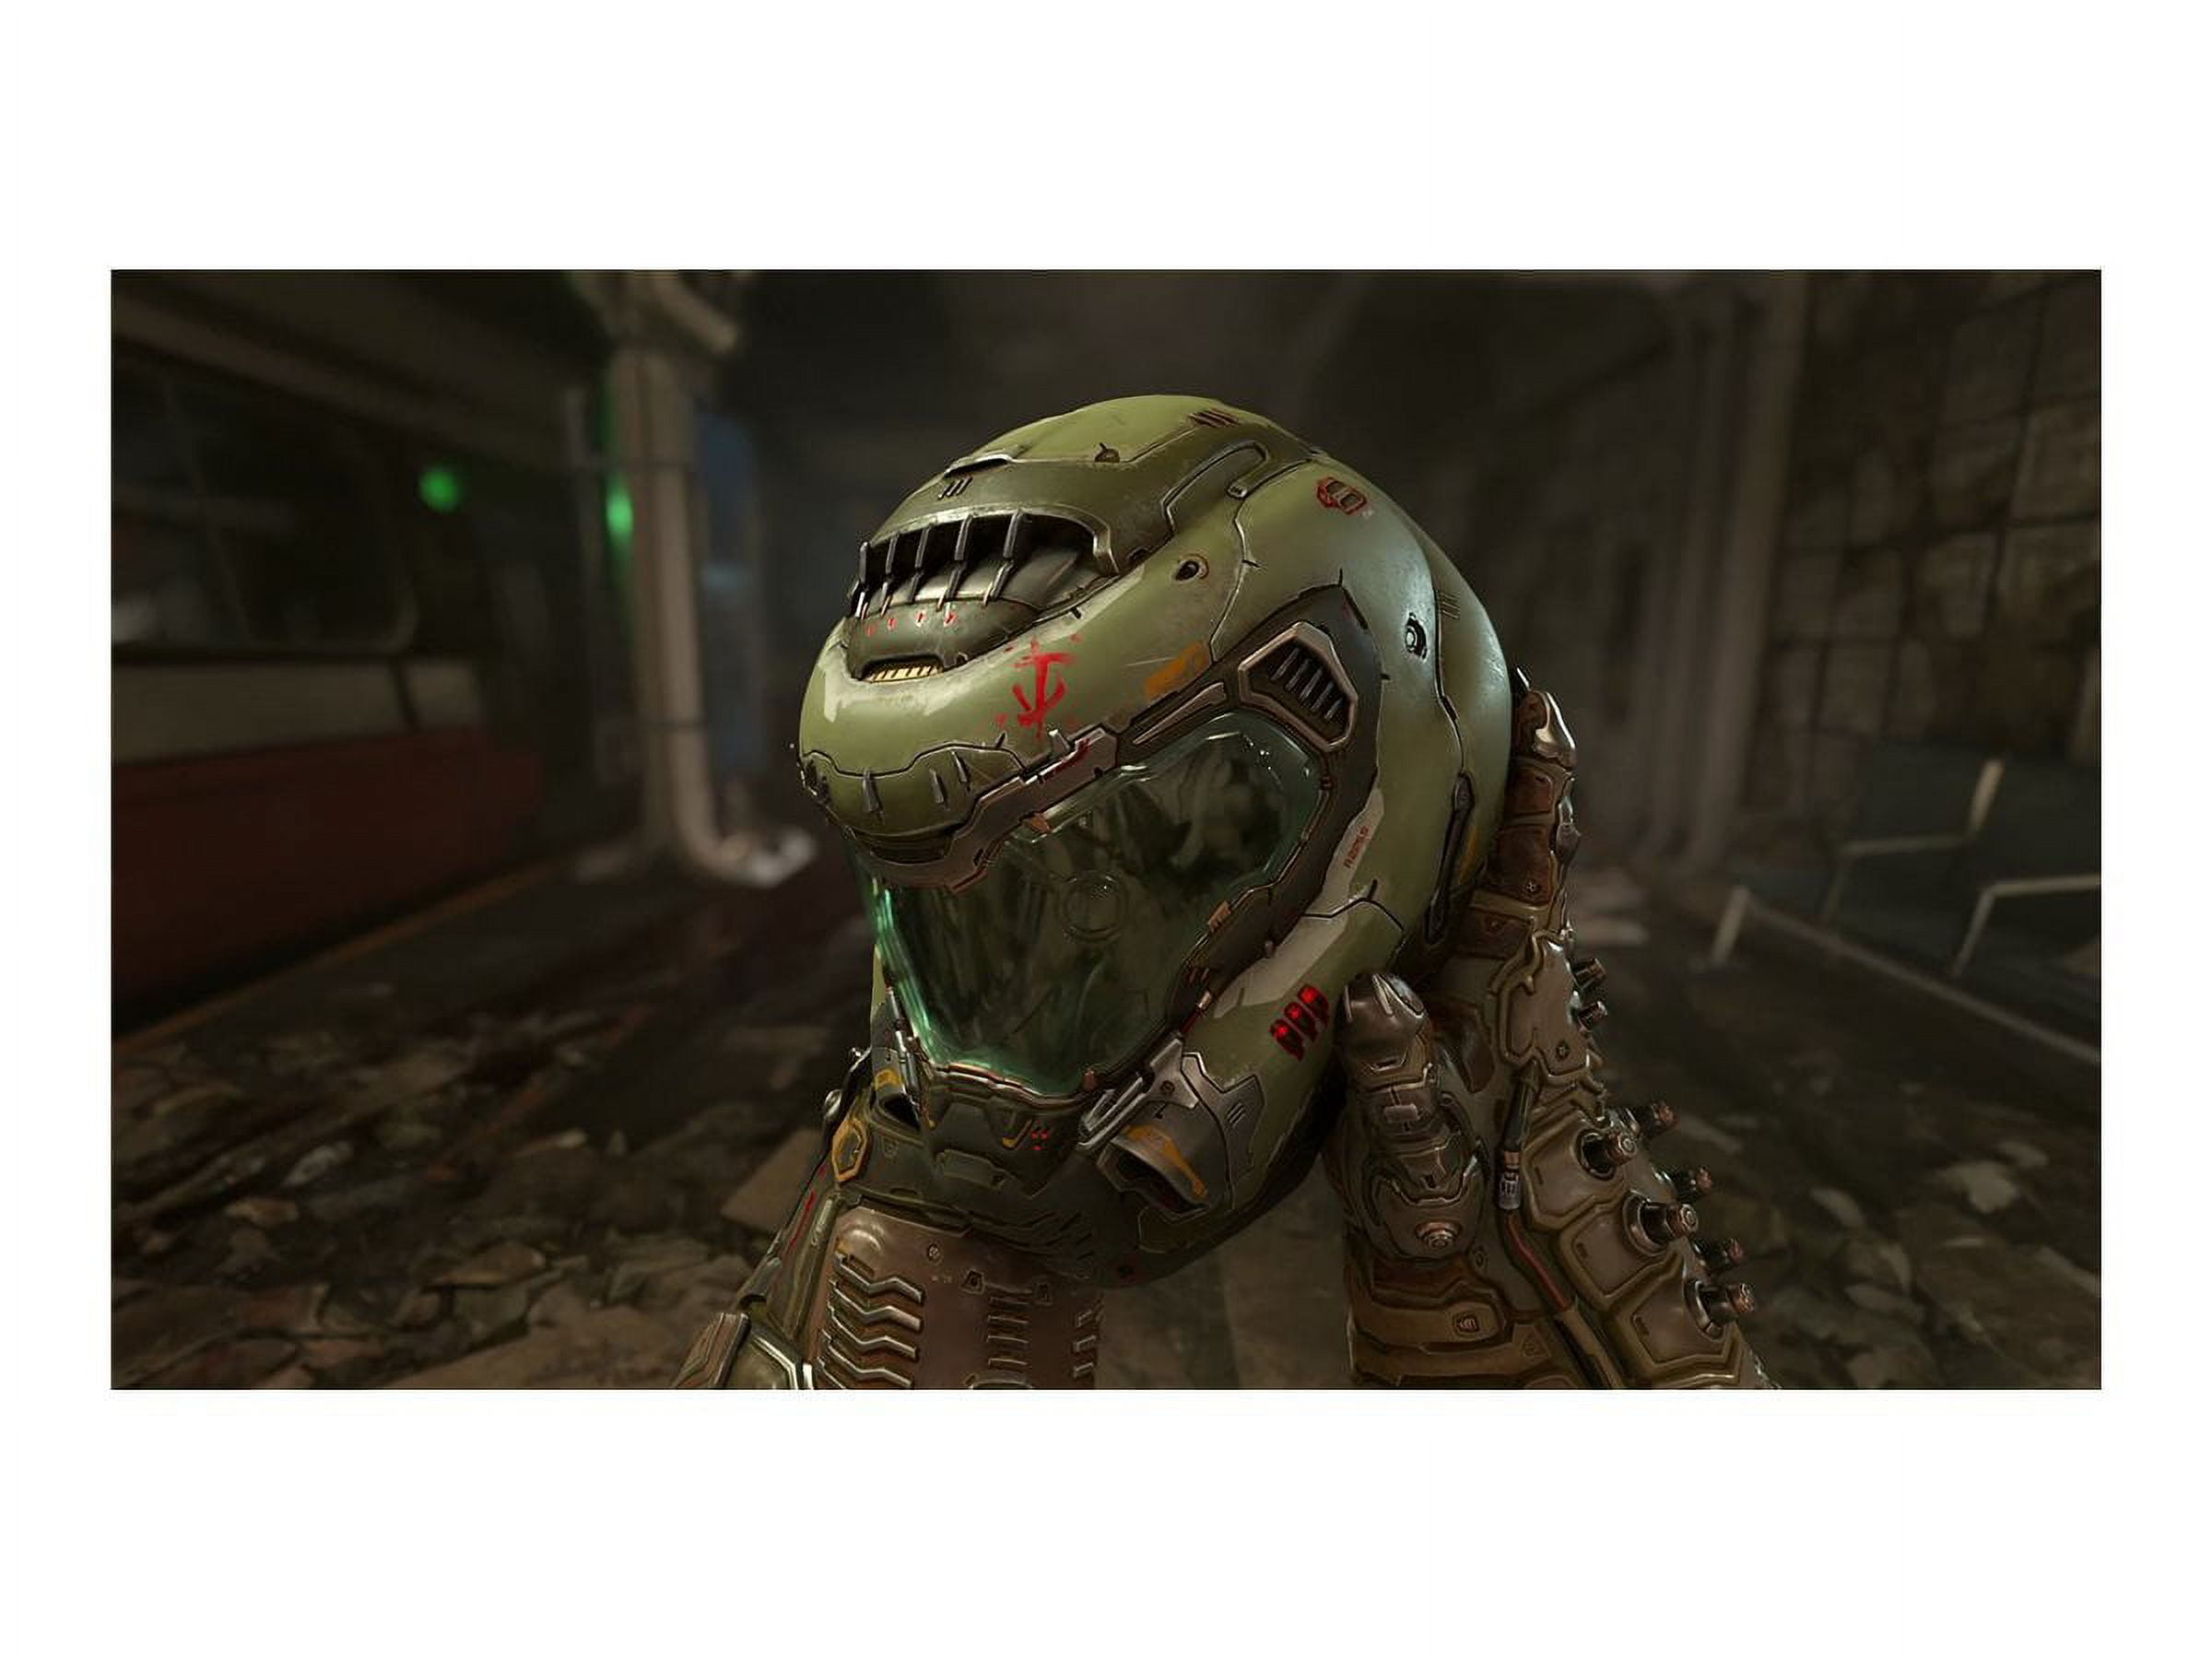  Doom: Eternal (Xbox One) : Video Games